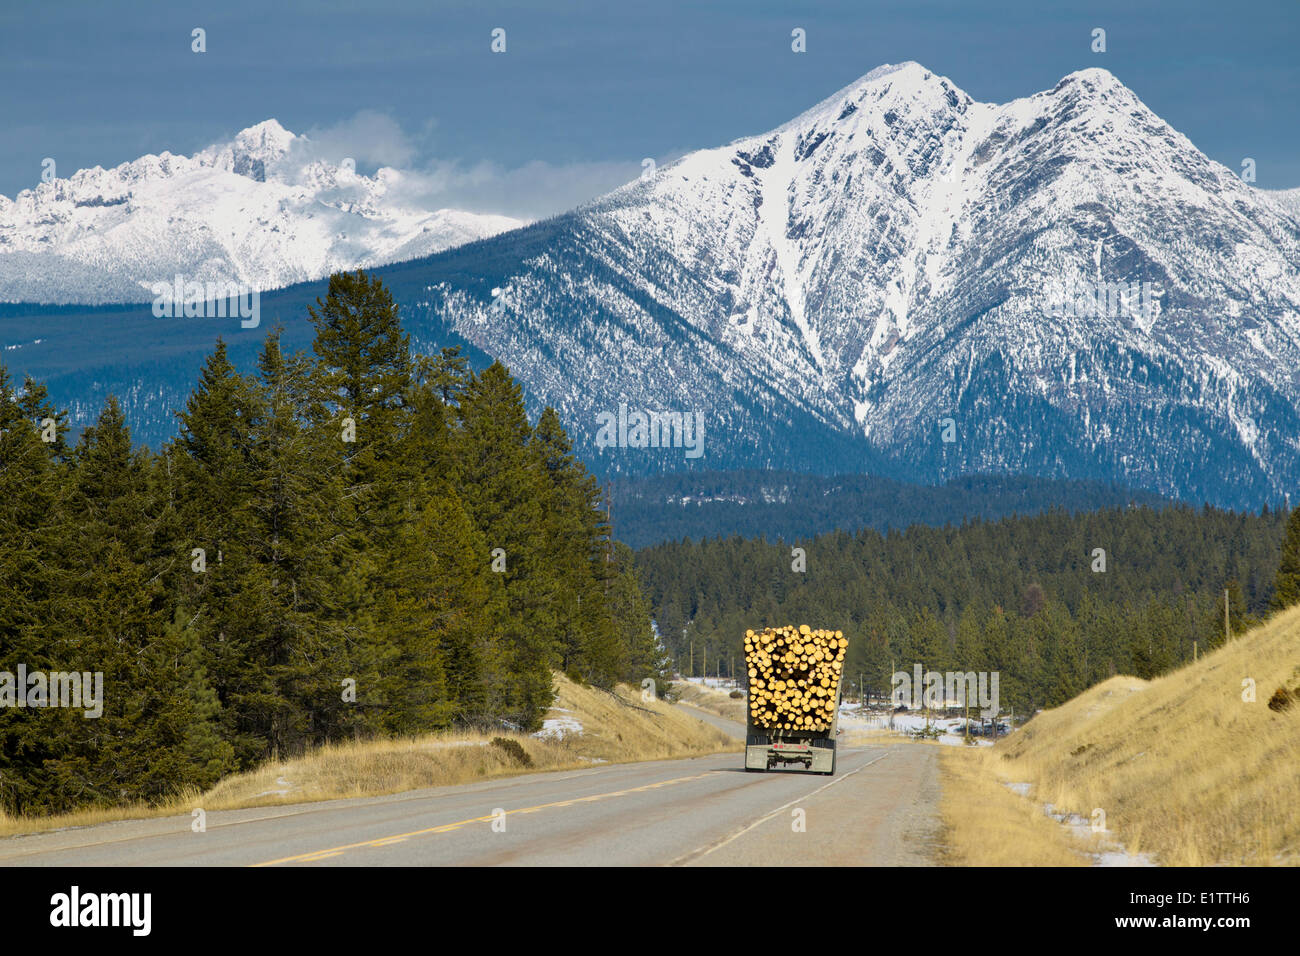 Truck hauling logs, East Kootney, British Columbia, Canada Stock Photo